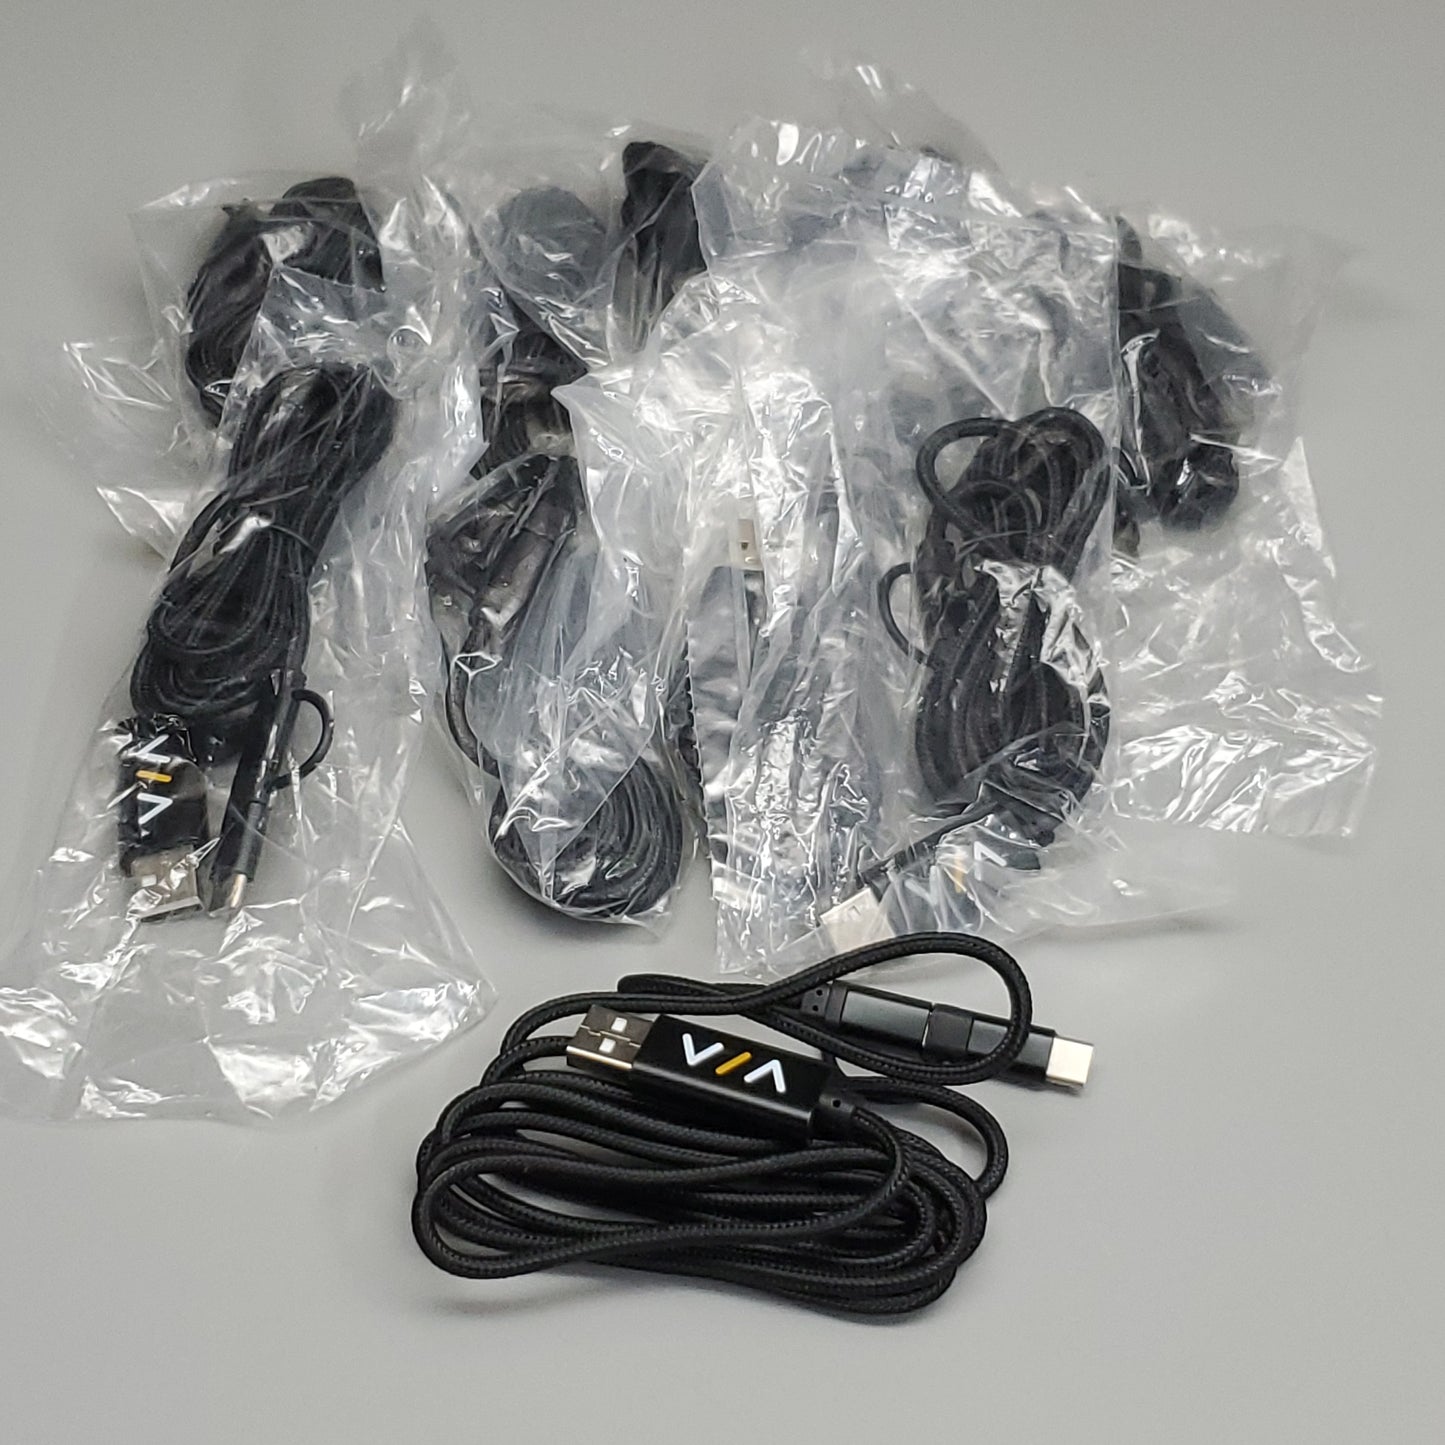 VIV 10 PK! USB-C / Weird End Power Adapter Cables 5' Black (New)